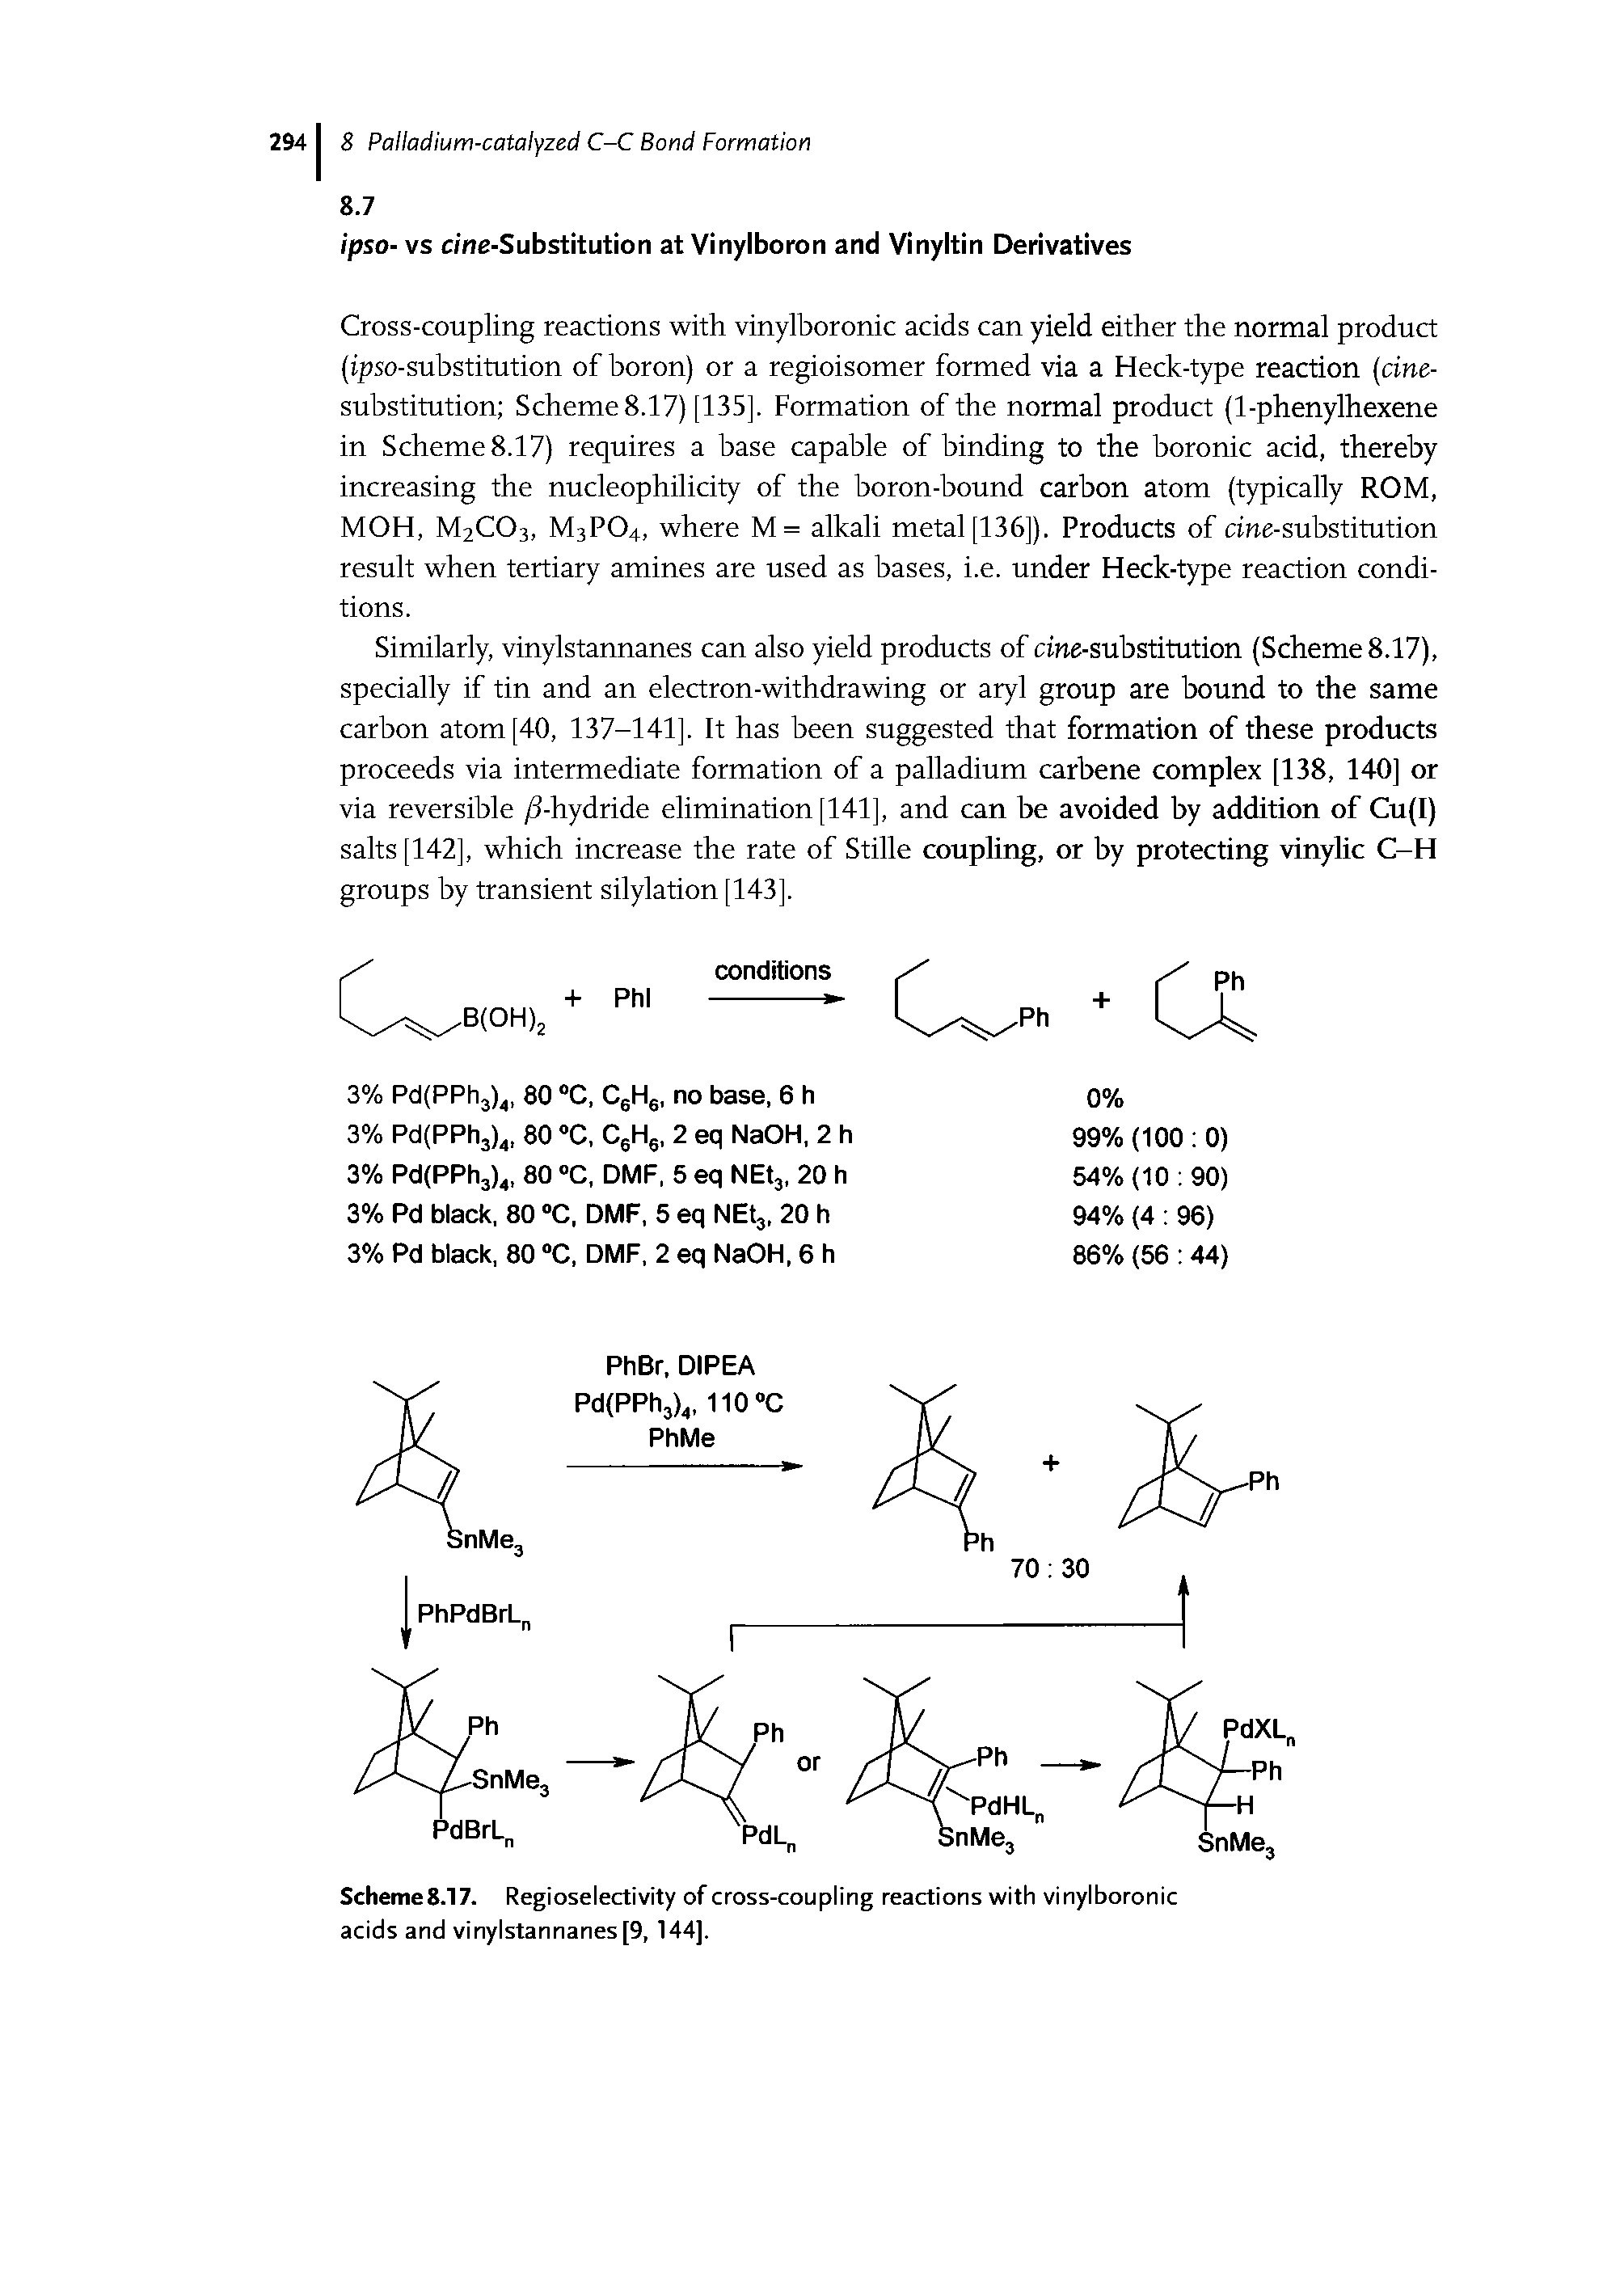 Scheme 8.17. Regioselectivity of cross-coupling reactions with vinylboronic acids and vinylstannanes [9, 144].